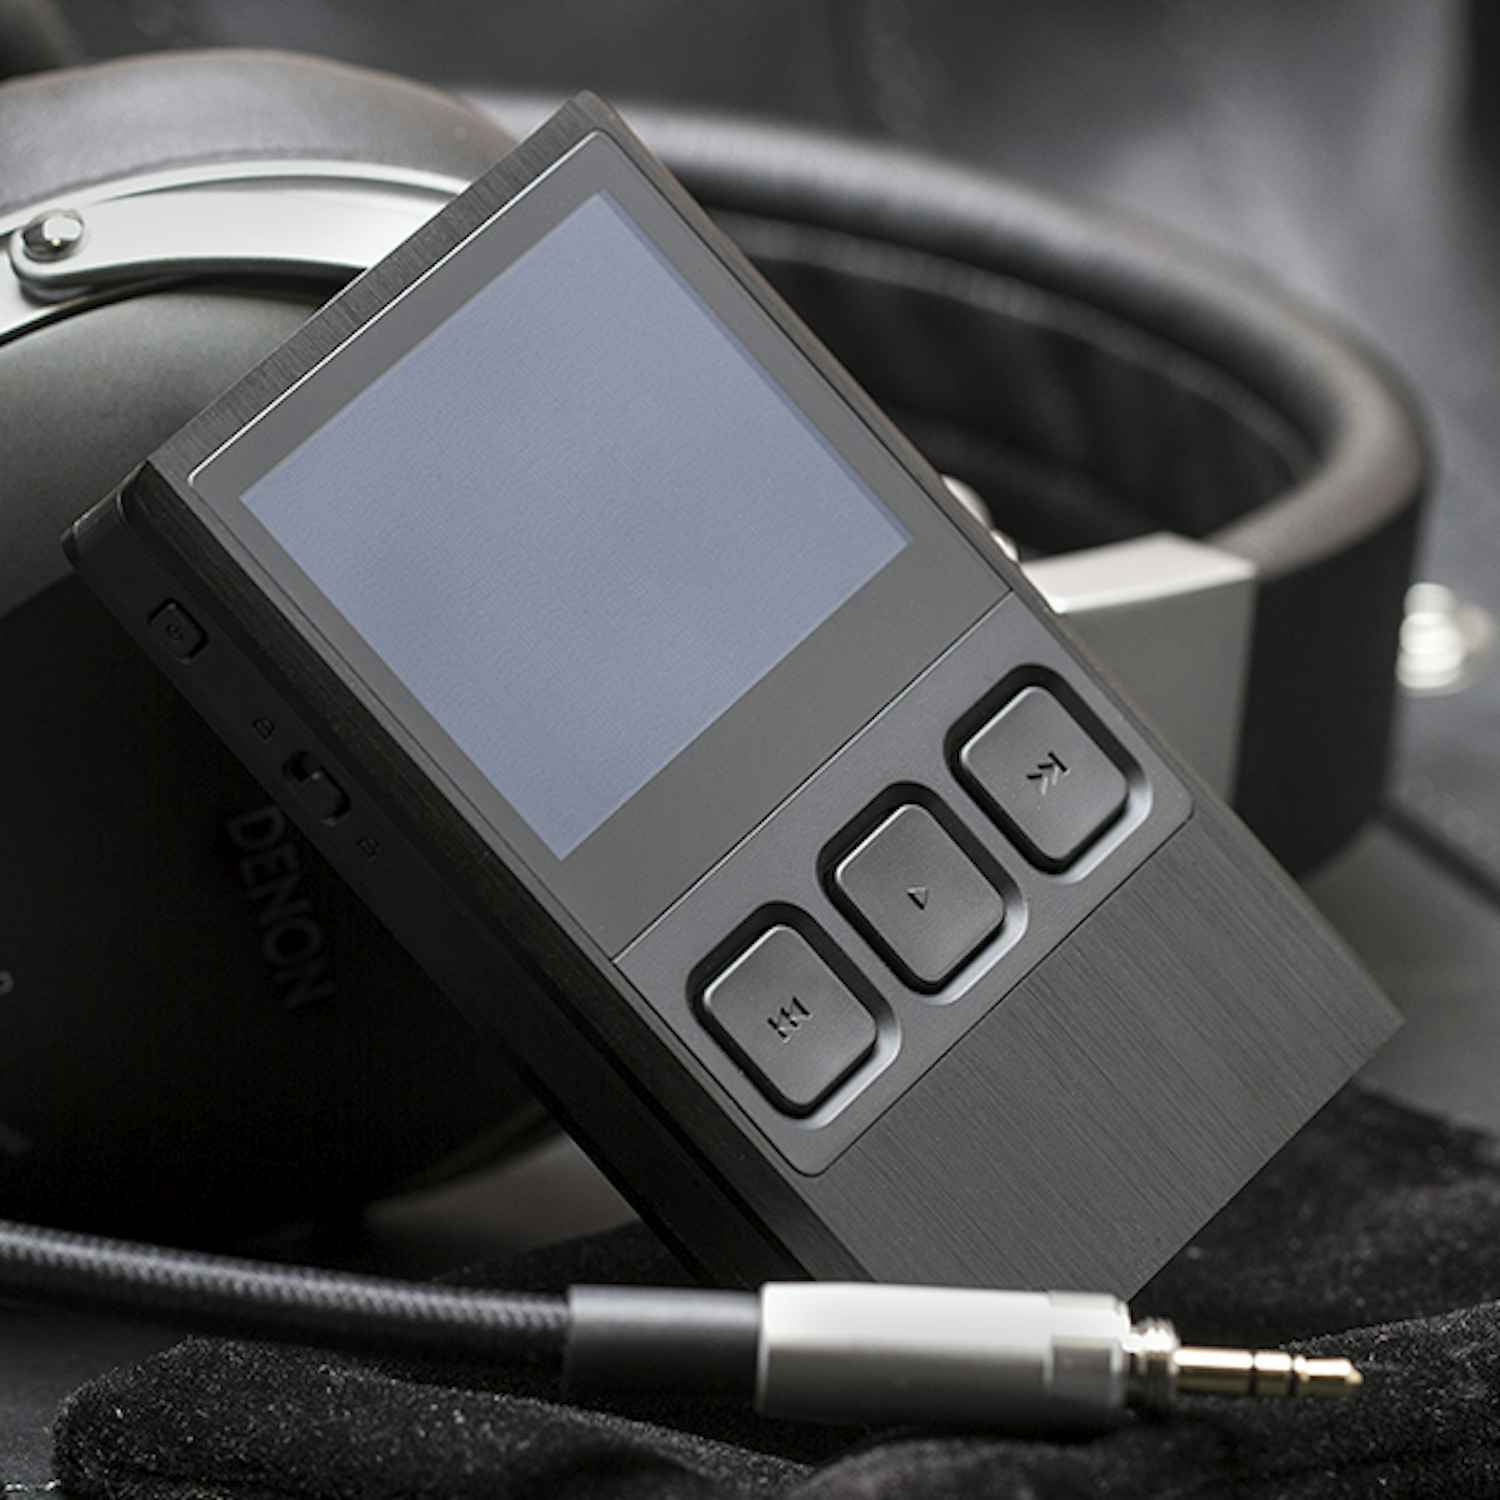 iBasso DX50 Digital Audio Player | Audiophile | Drop